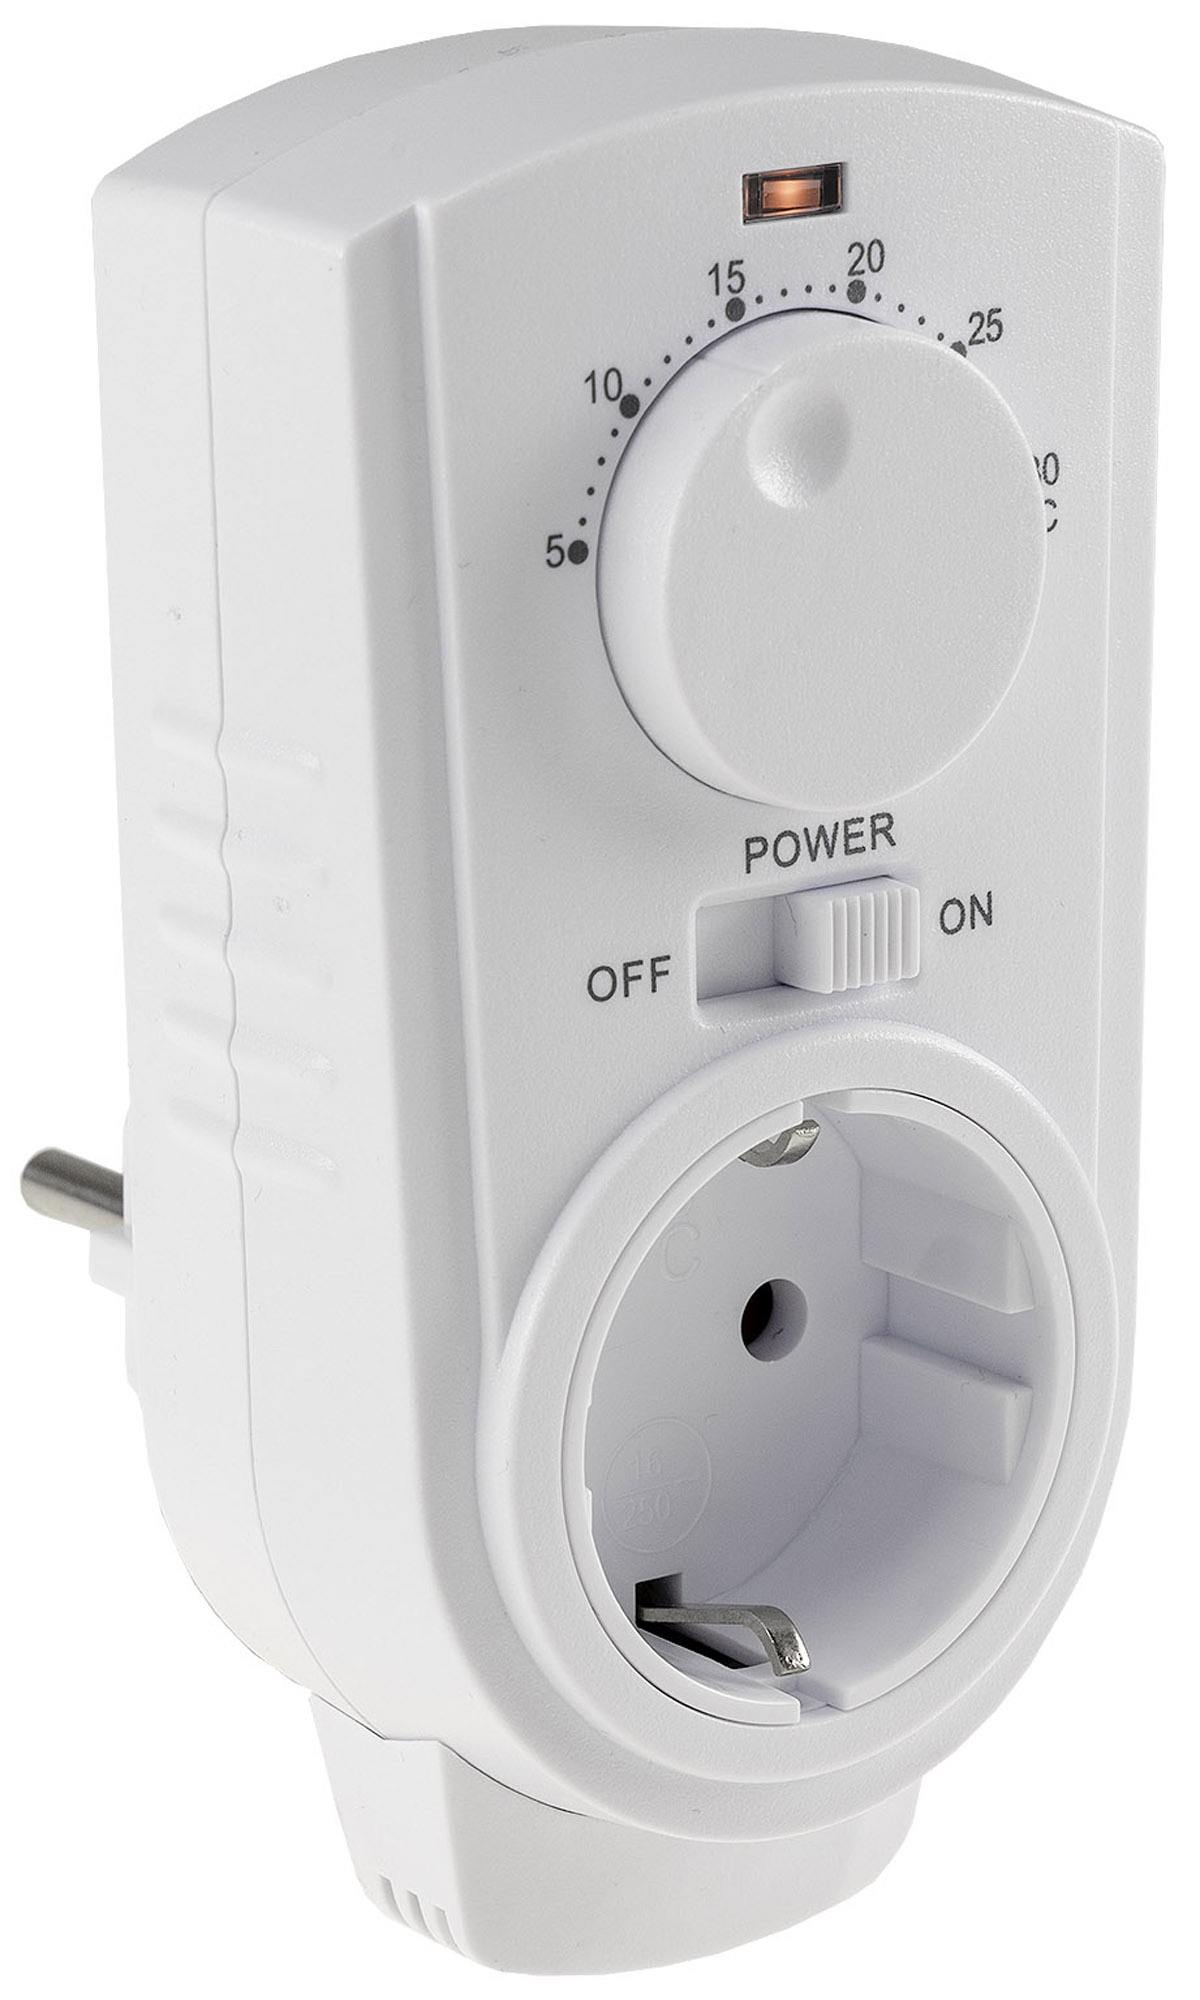 Steckdosen-Thermostat ST-35 ana max. 3500W, 5-30°C, AUS/AUTO, 230V - »